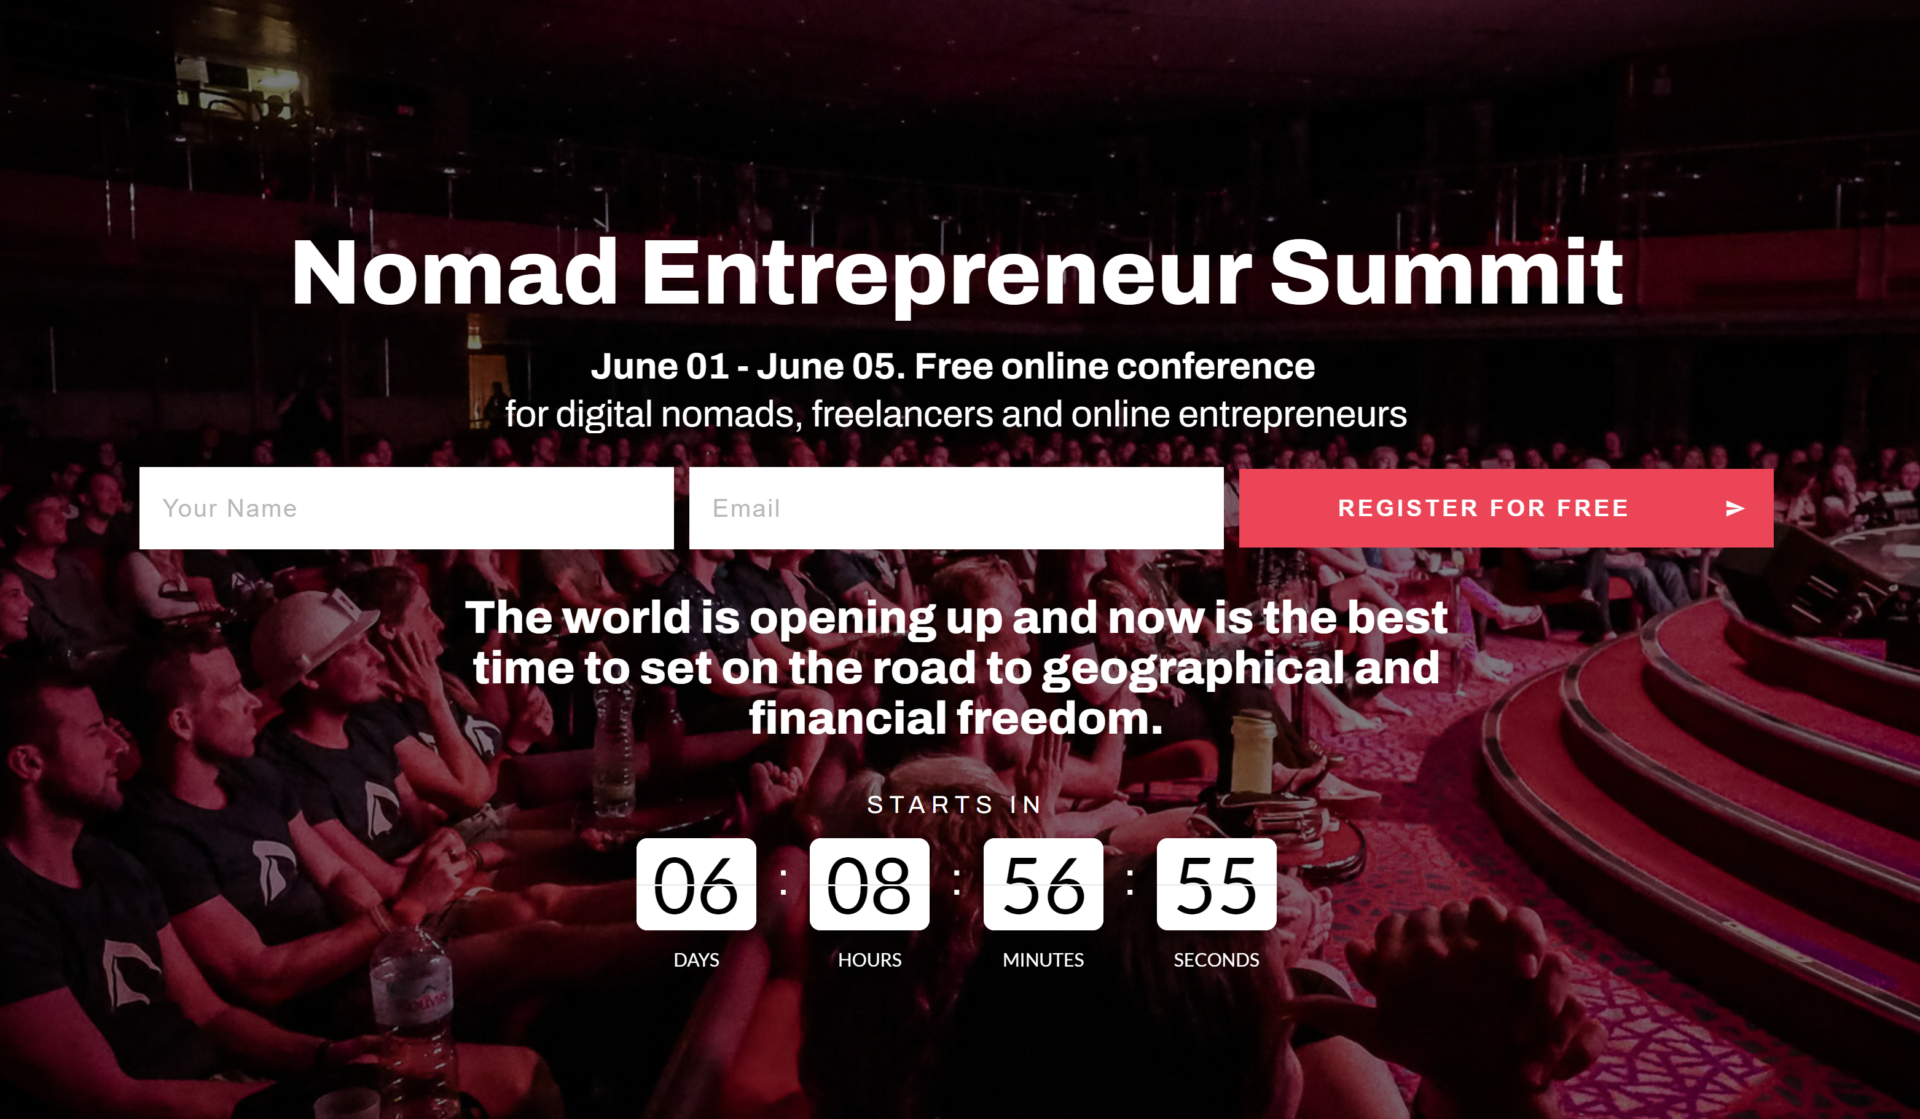 Image credit: Nomad Entrepreneur Summit